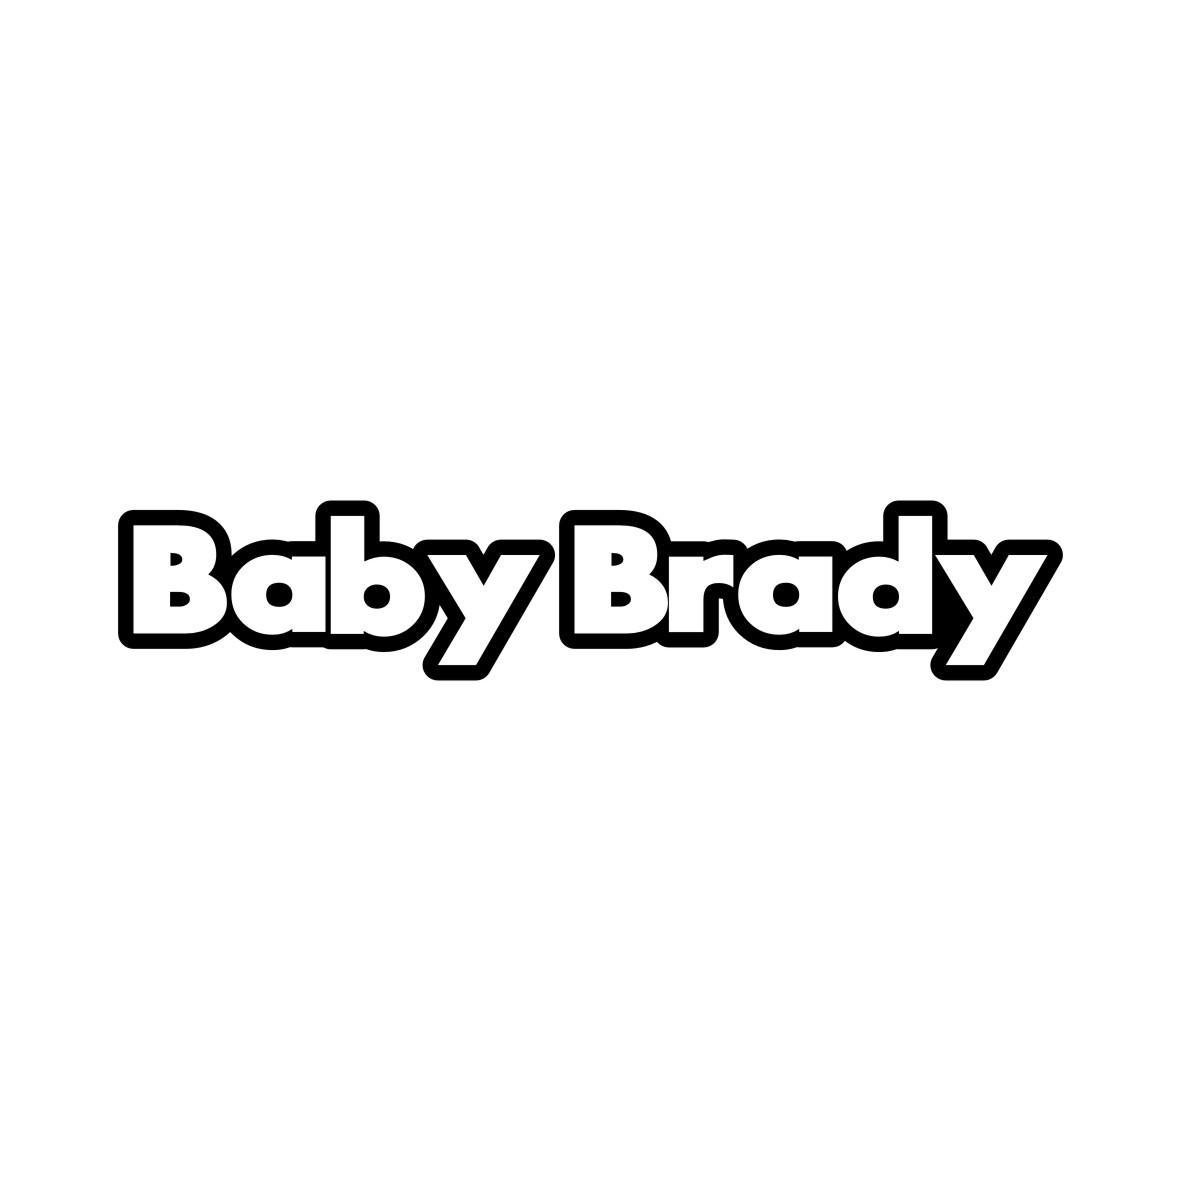 BABY BRADY商标转让